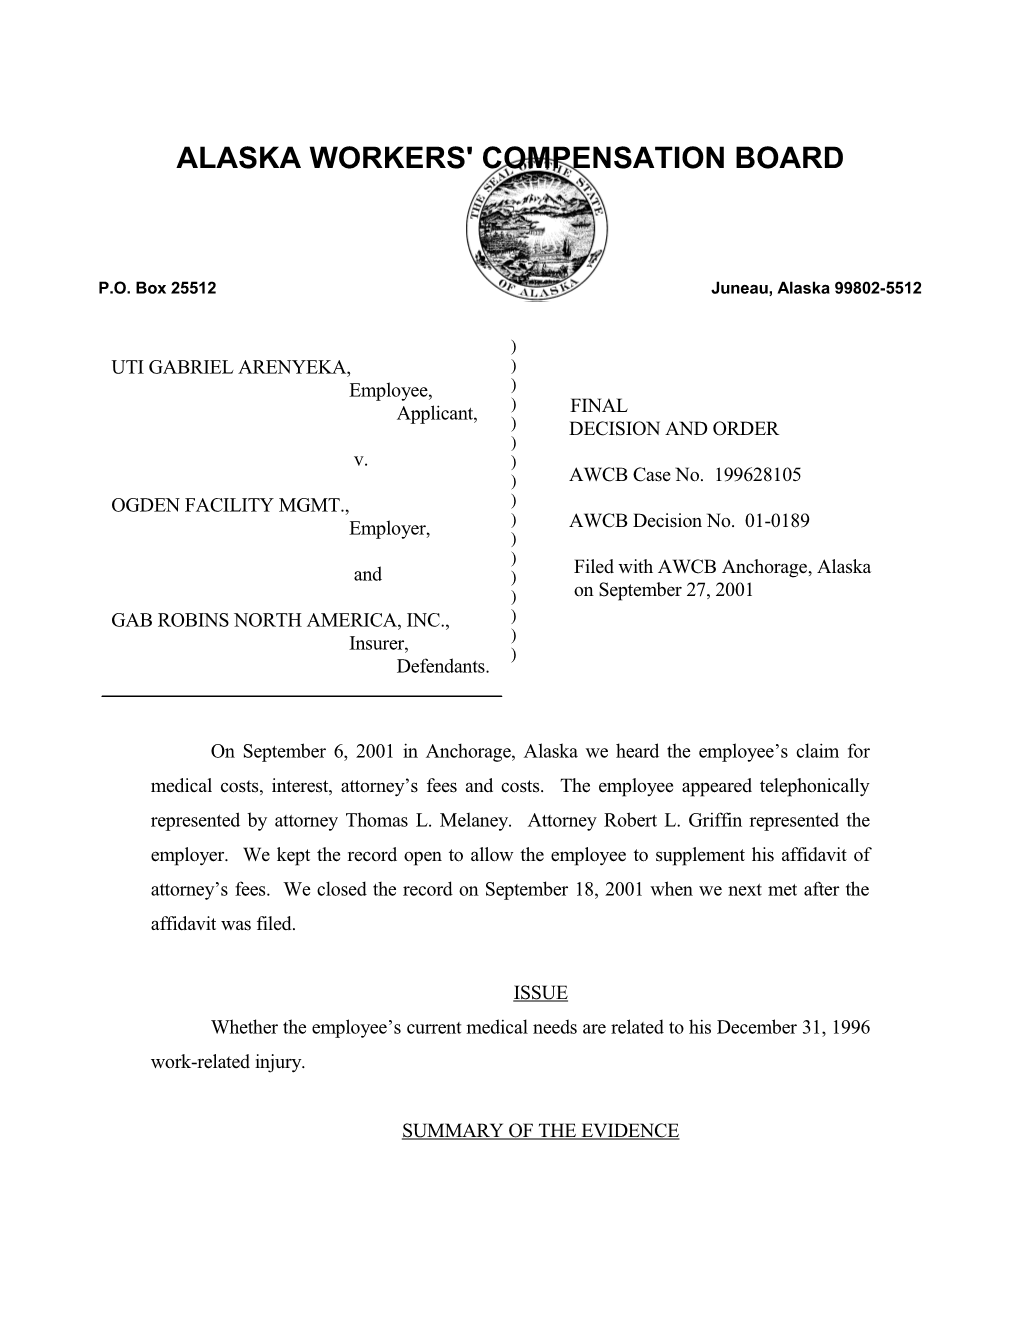 Alaska Workers' Compensation Board s7